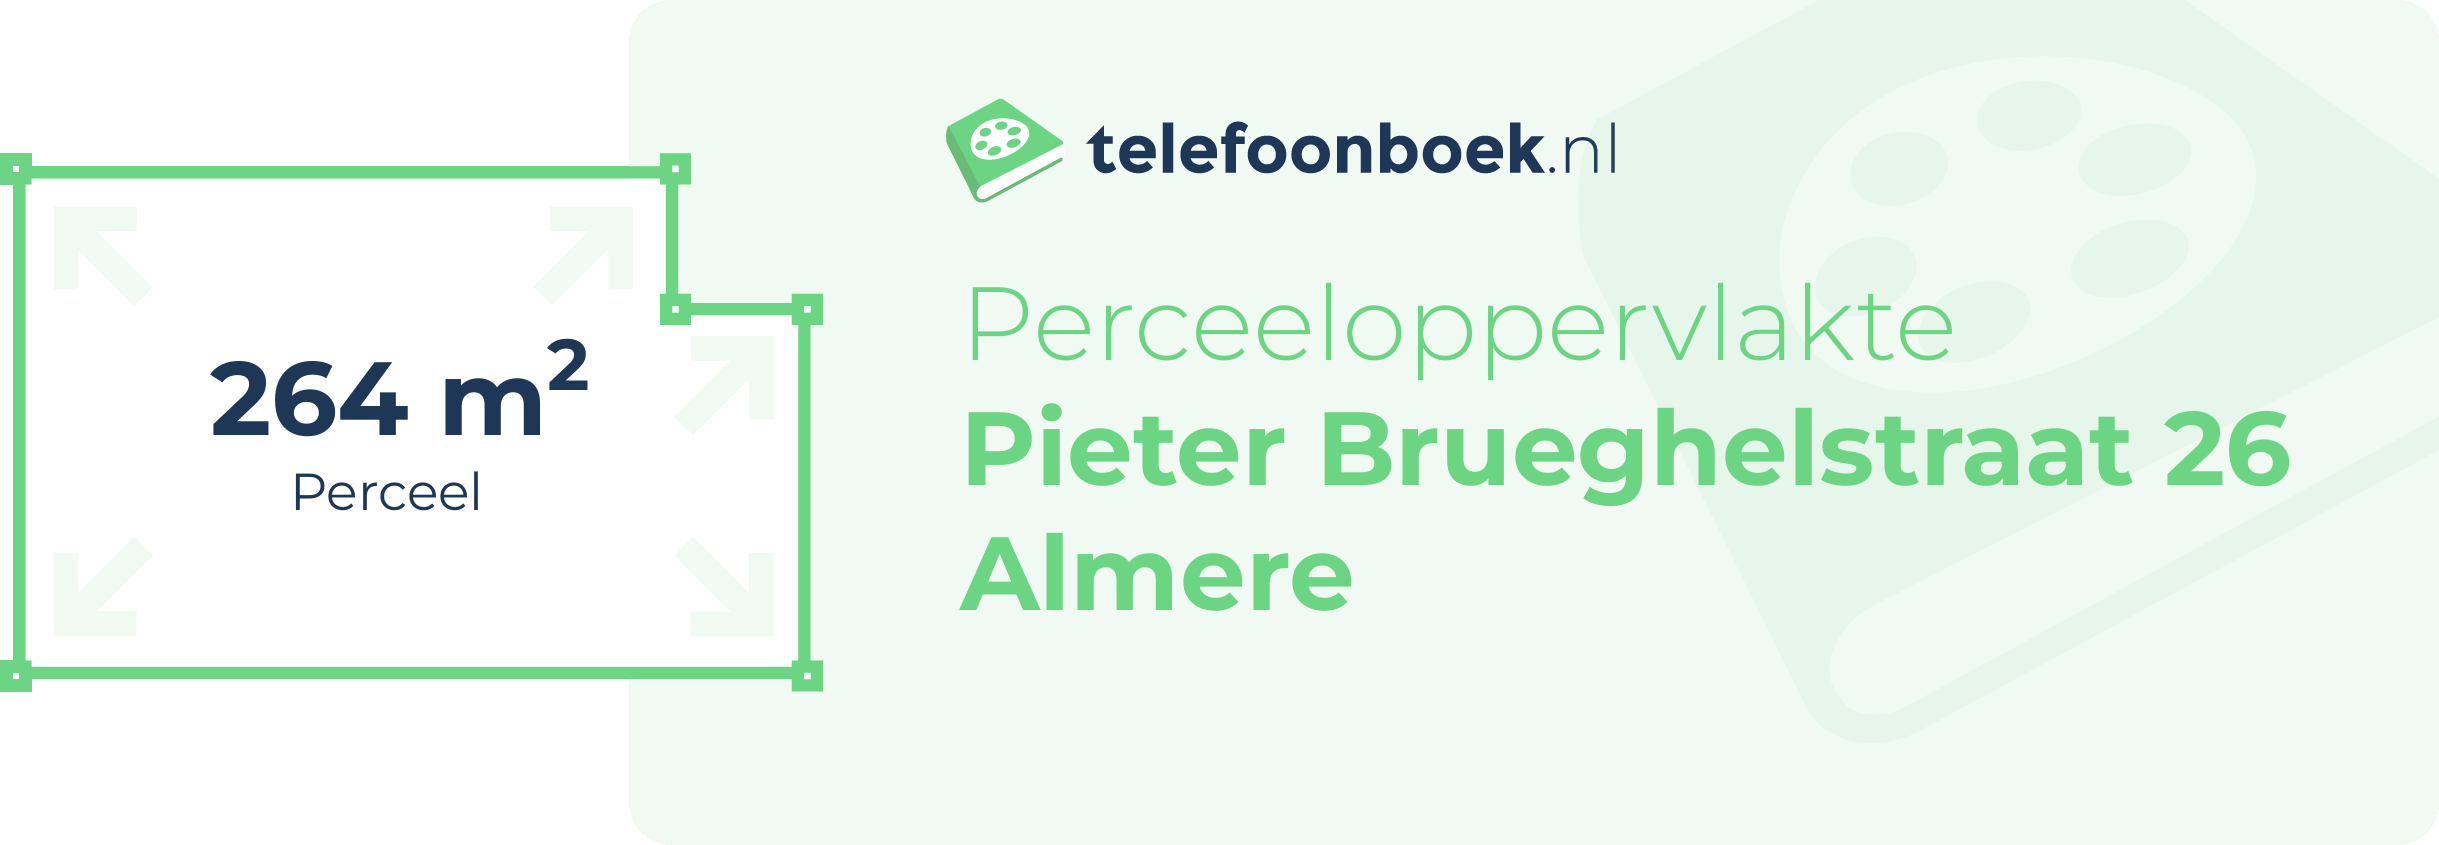 Perceeloppervlakte Pieter Brueghelstraat 26 Almere